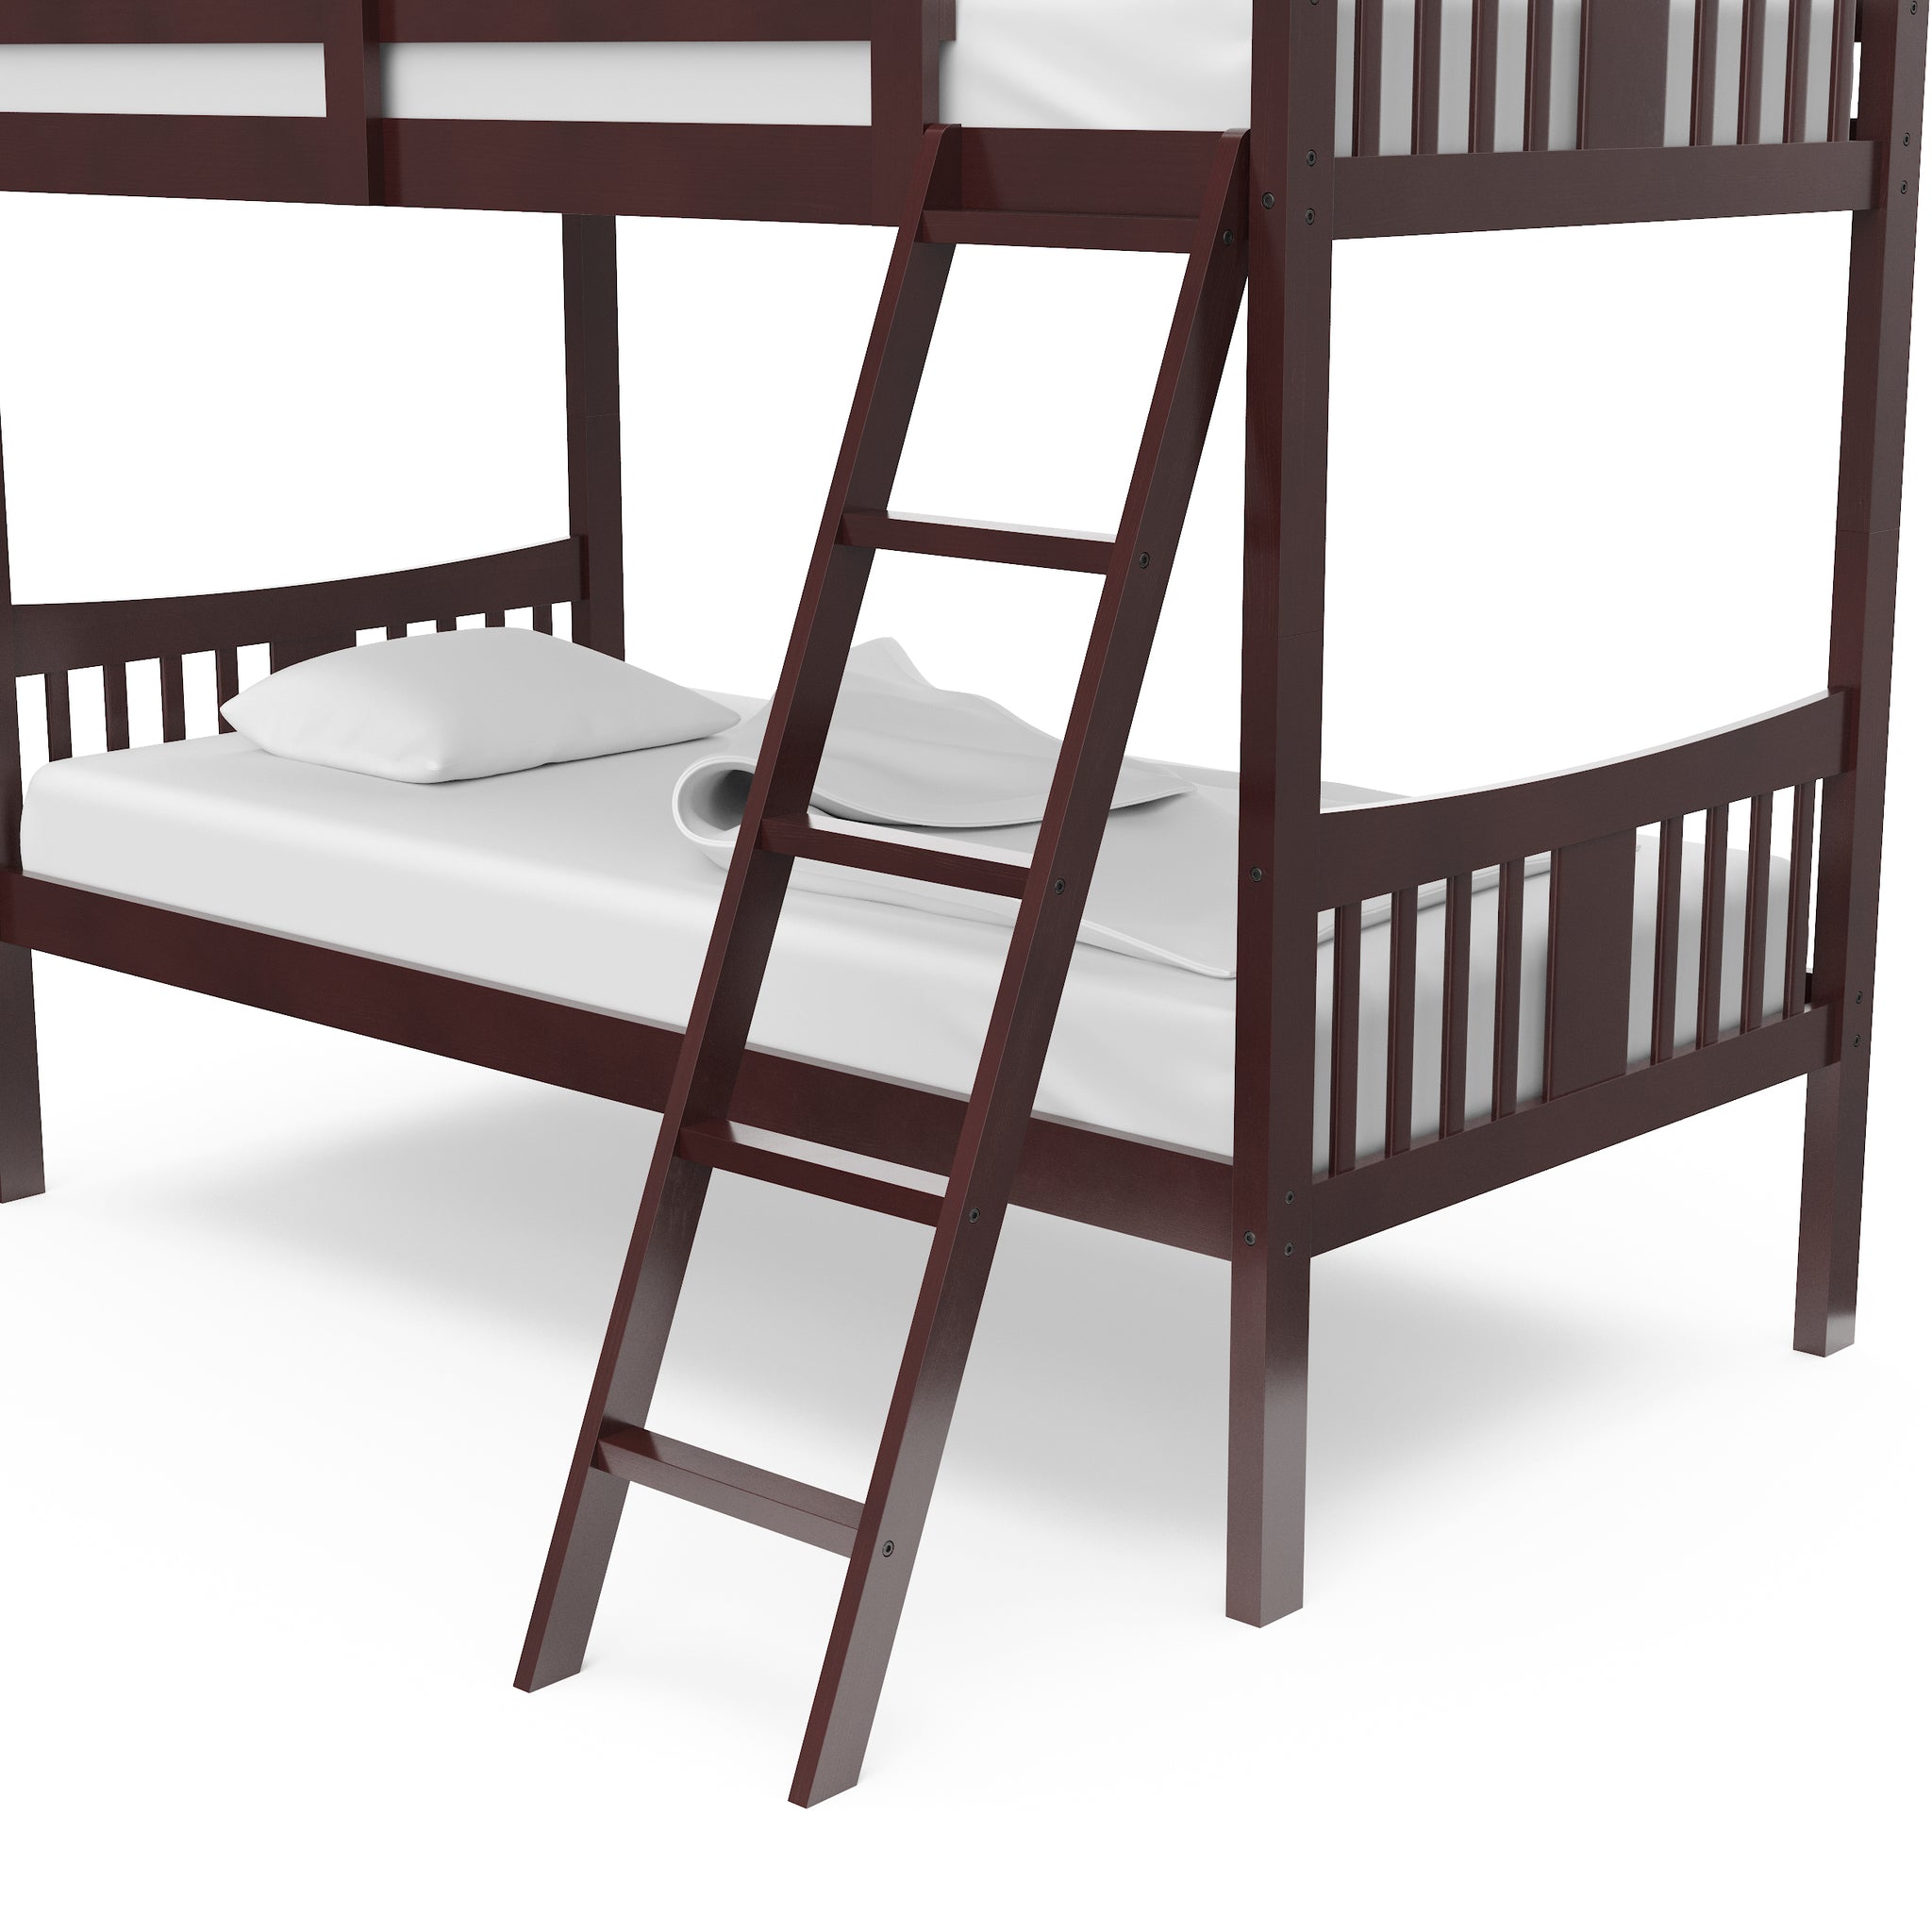 espresso bottom bunk bed ladder close-up view